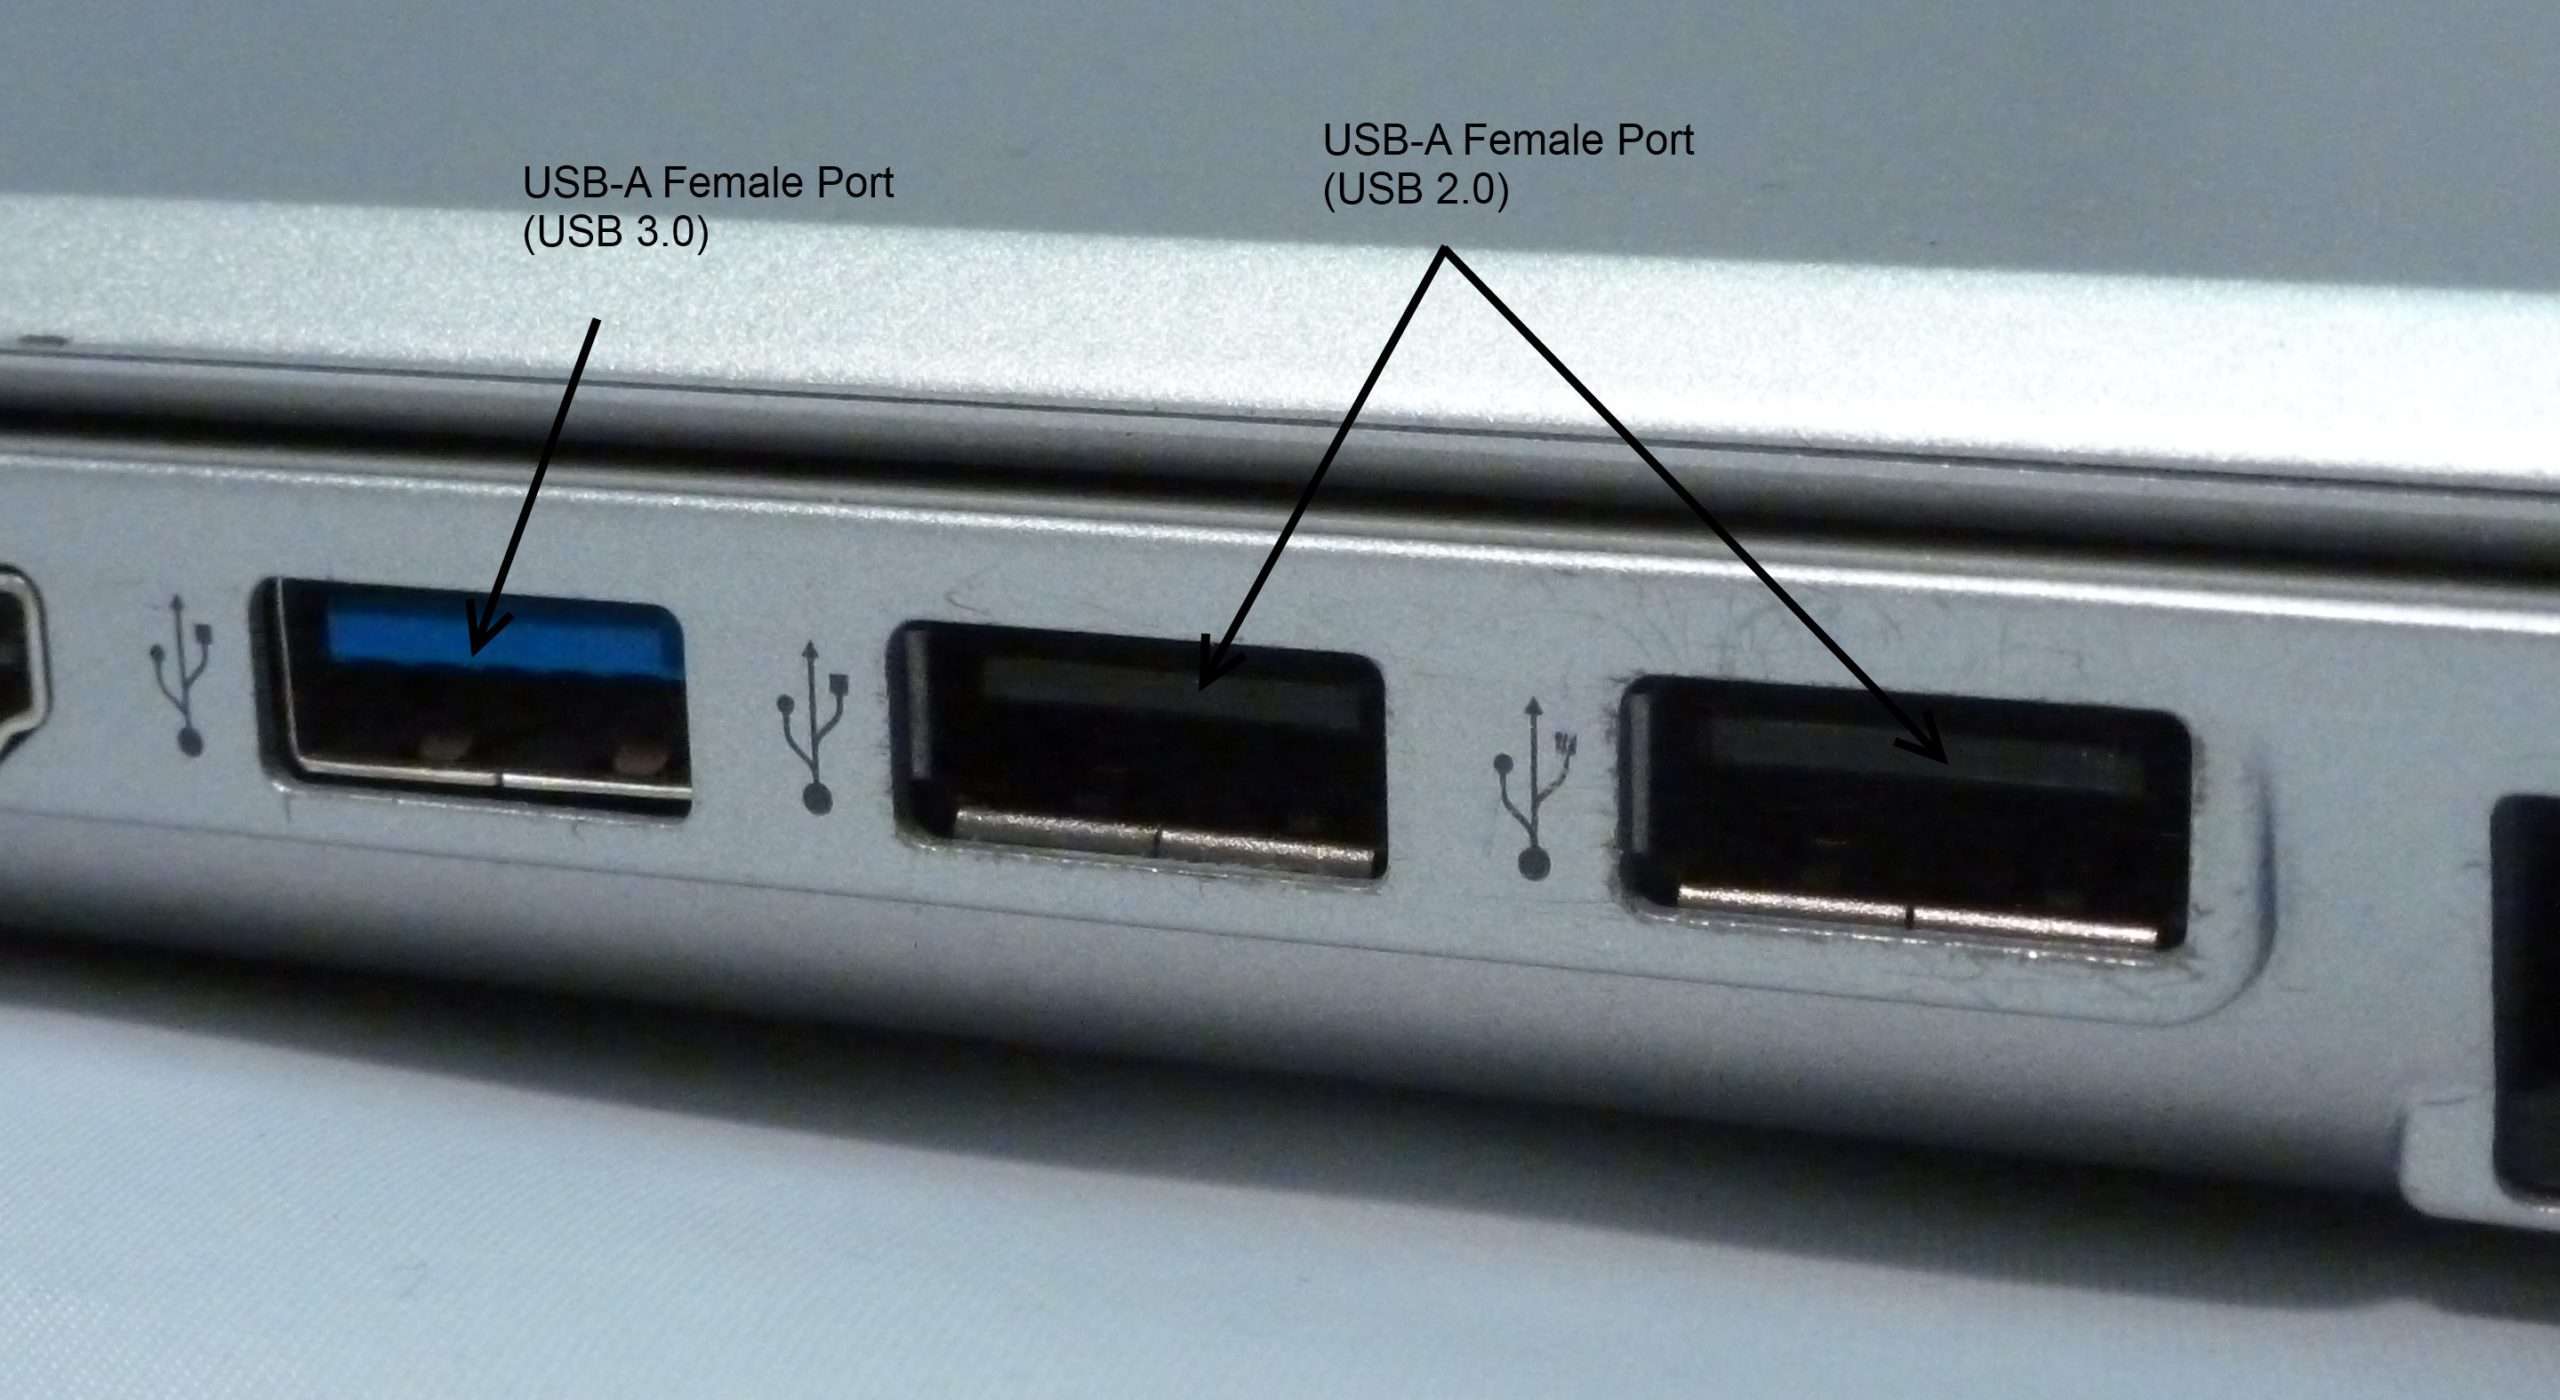 USB versions